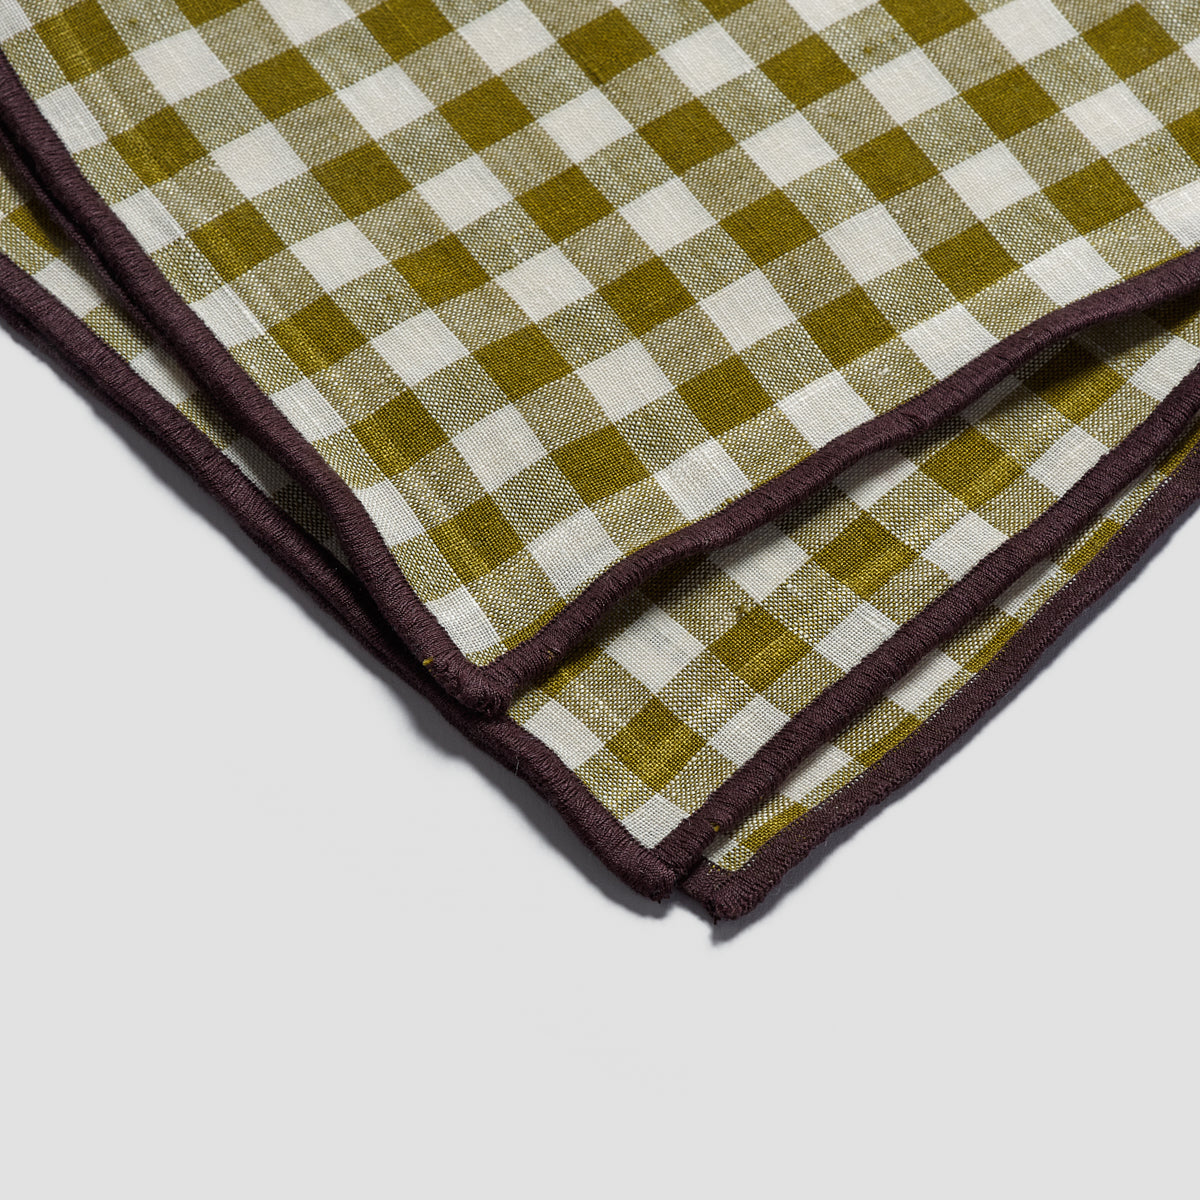 Botanical Green Gingham Linen Tablecloth - Piglet in Bed